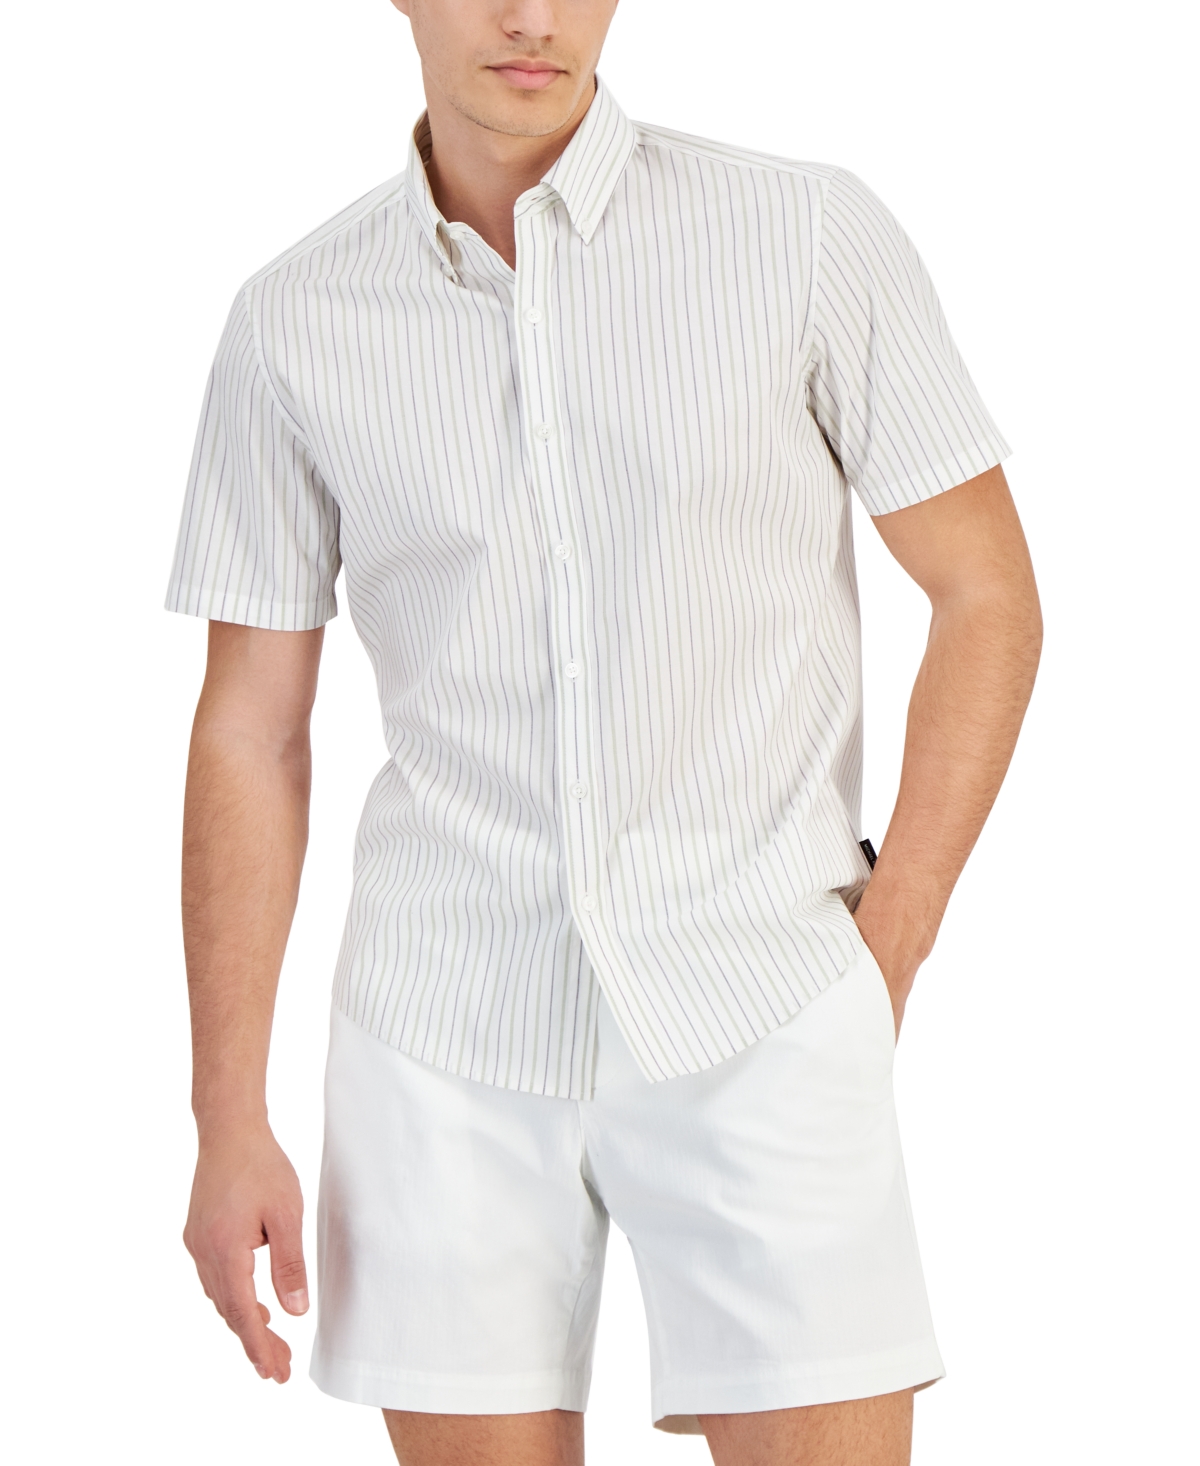 Men's Slim-Fit Stretch Stripe Button-Down Shirt - White